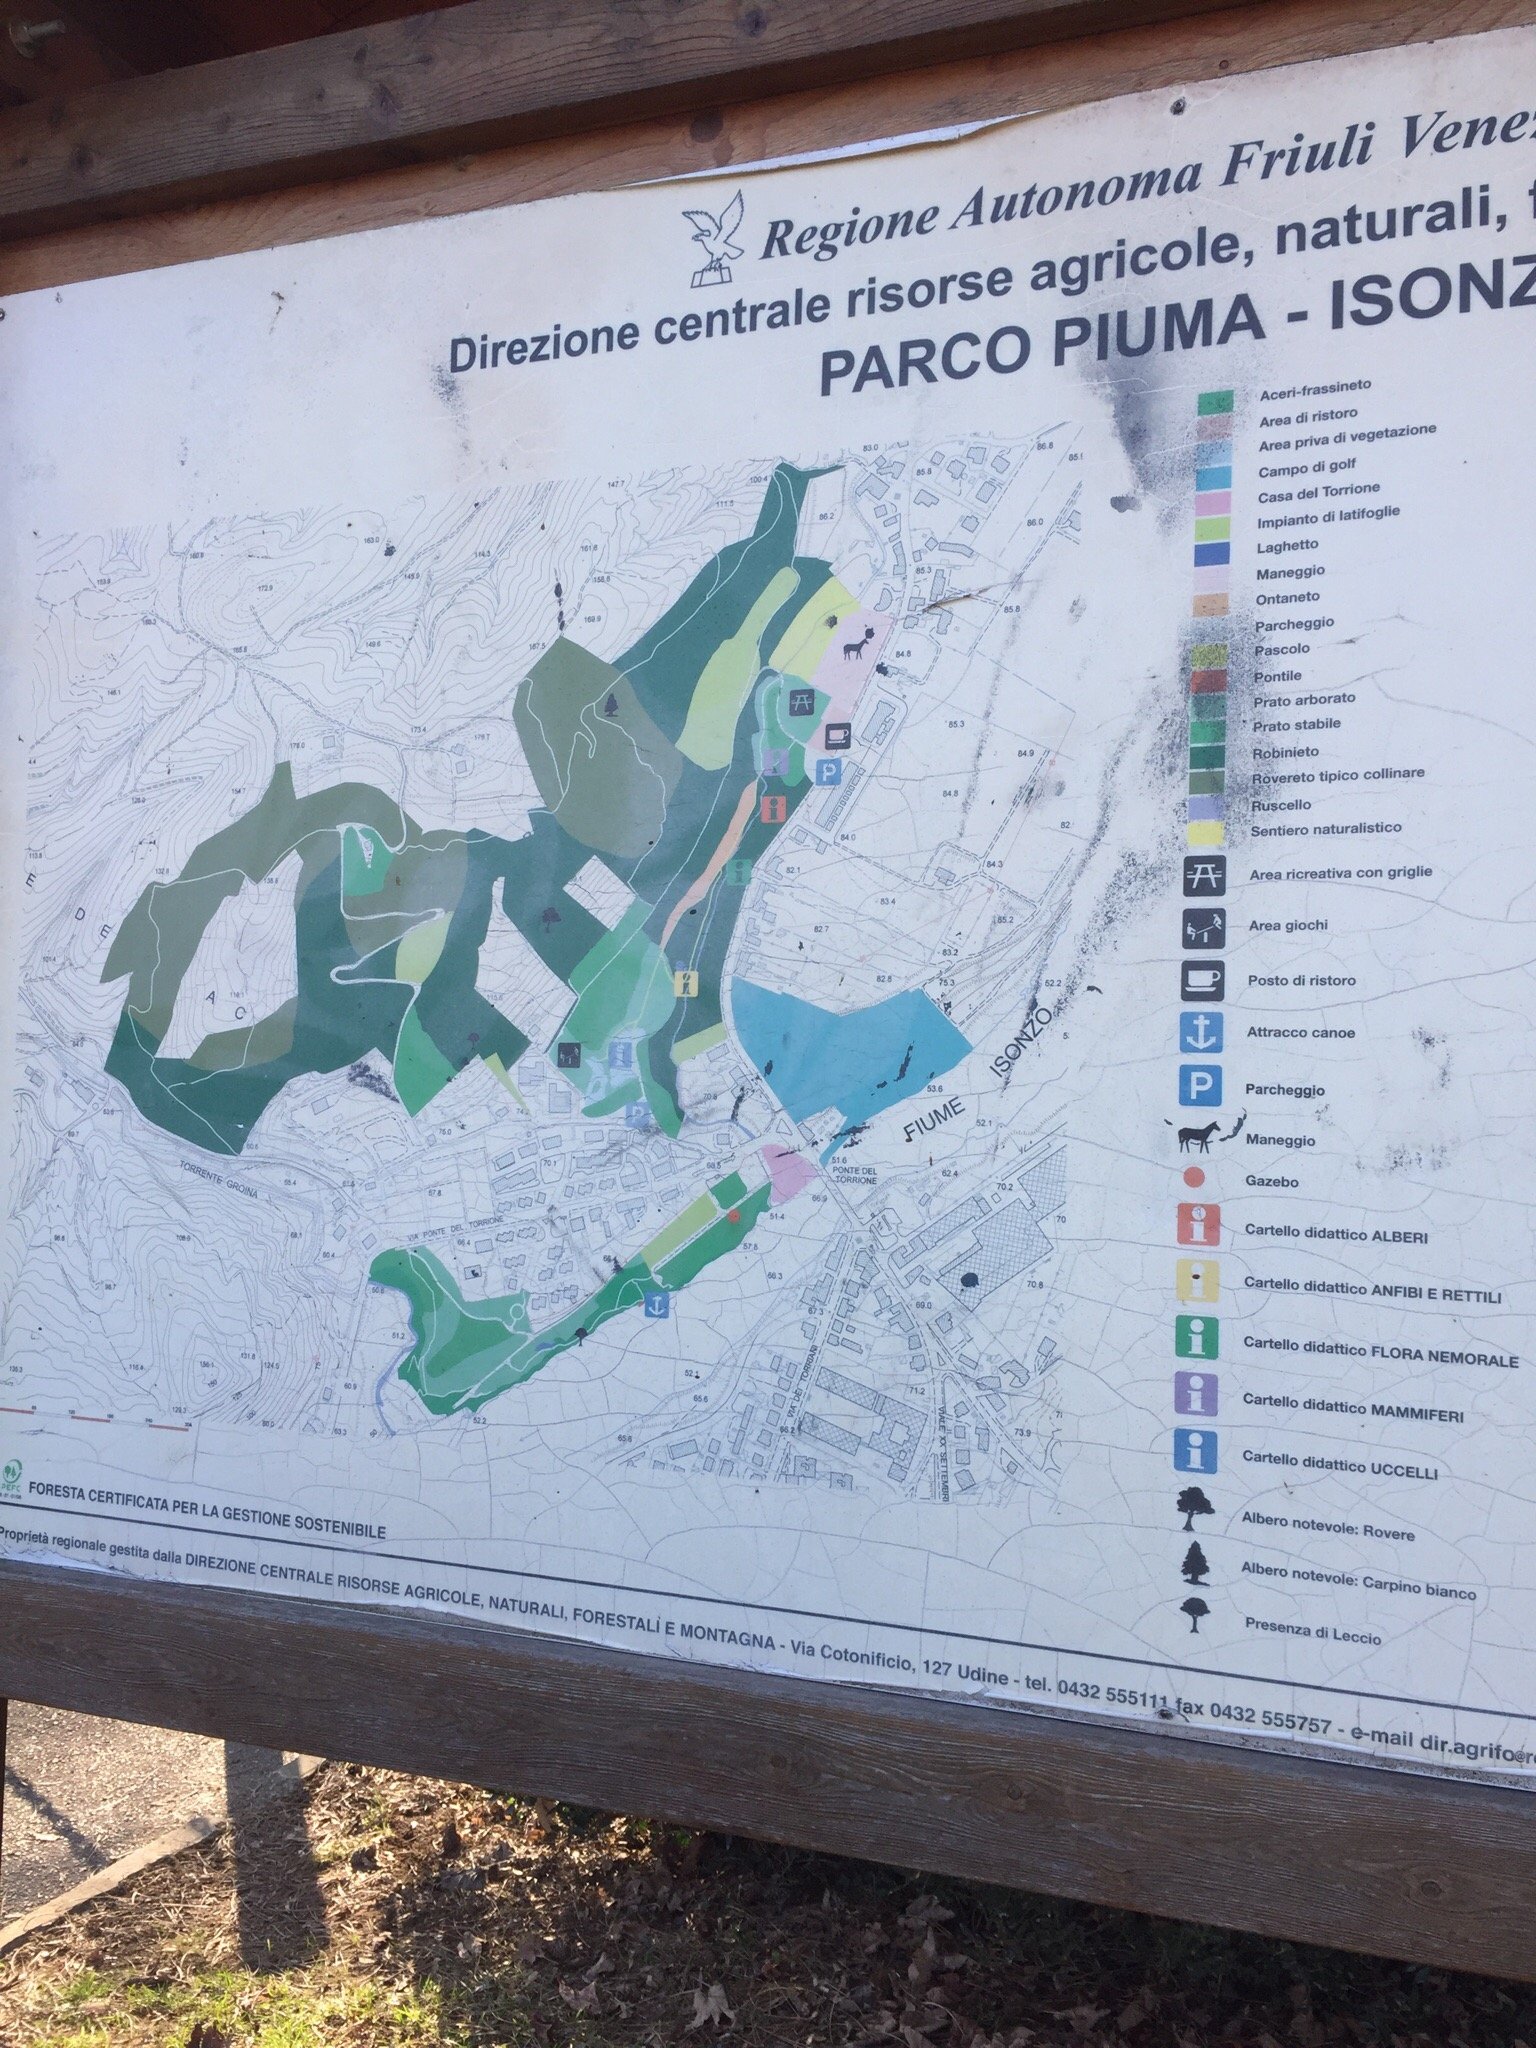 Parco di Piuma Isonzo